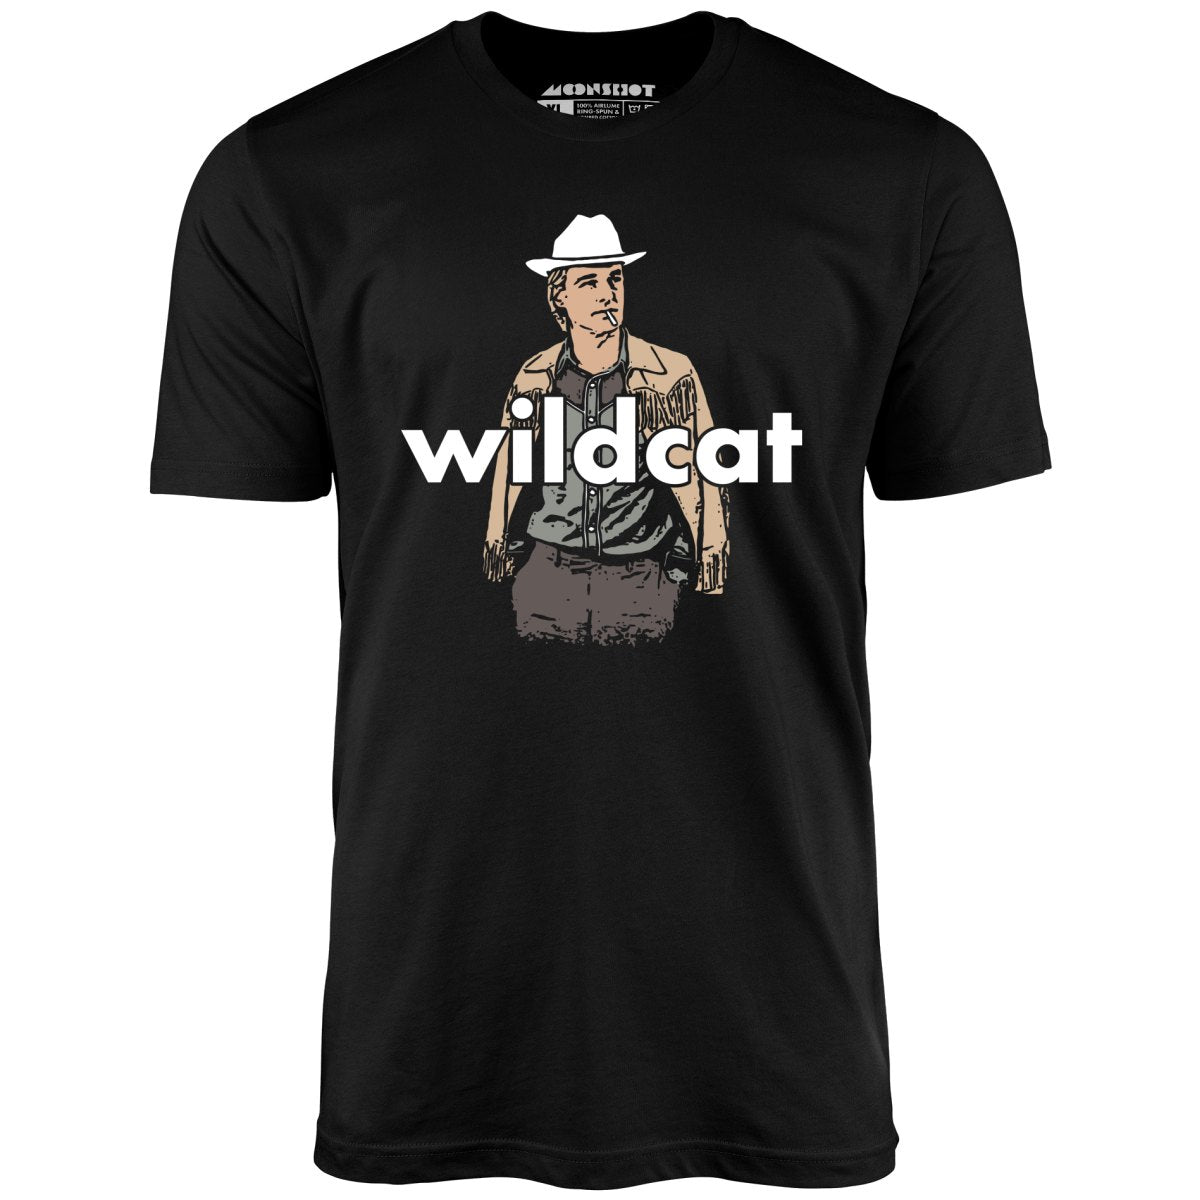 Wildcat - Unisex T-Shirt